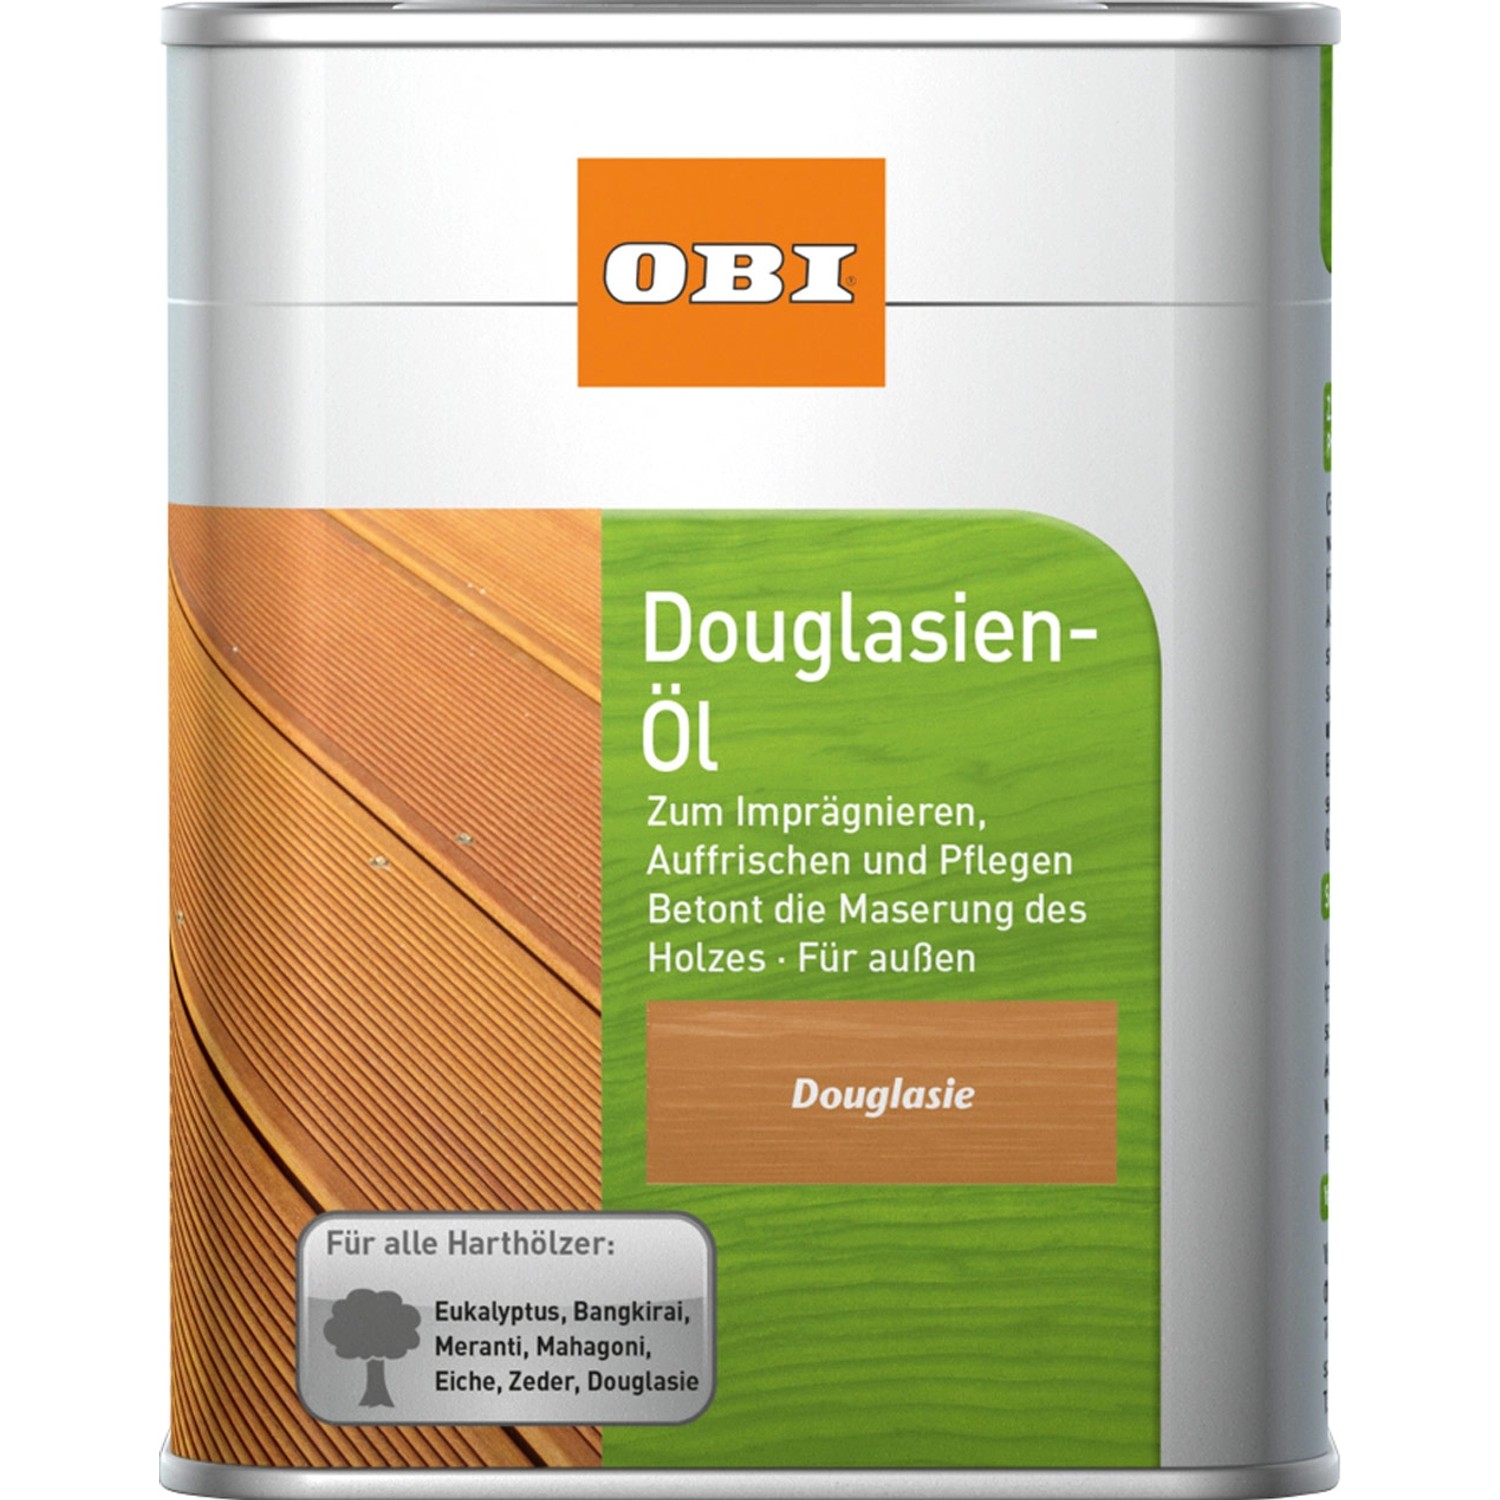 OBI Douglasien-Öl 750 ml